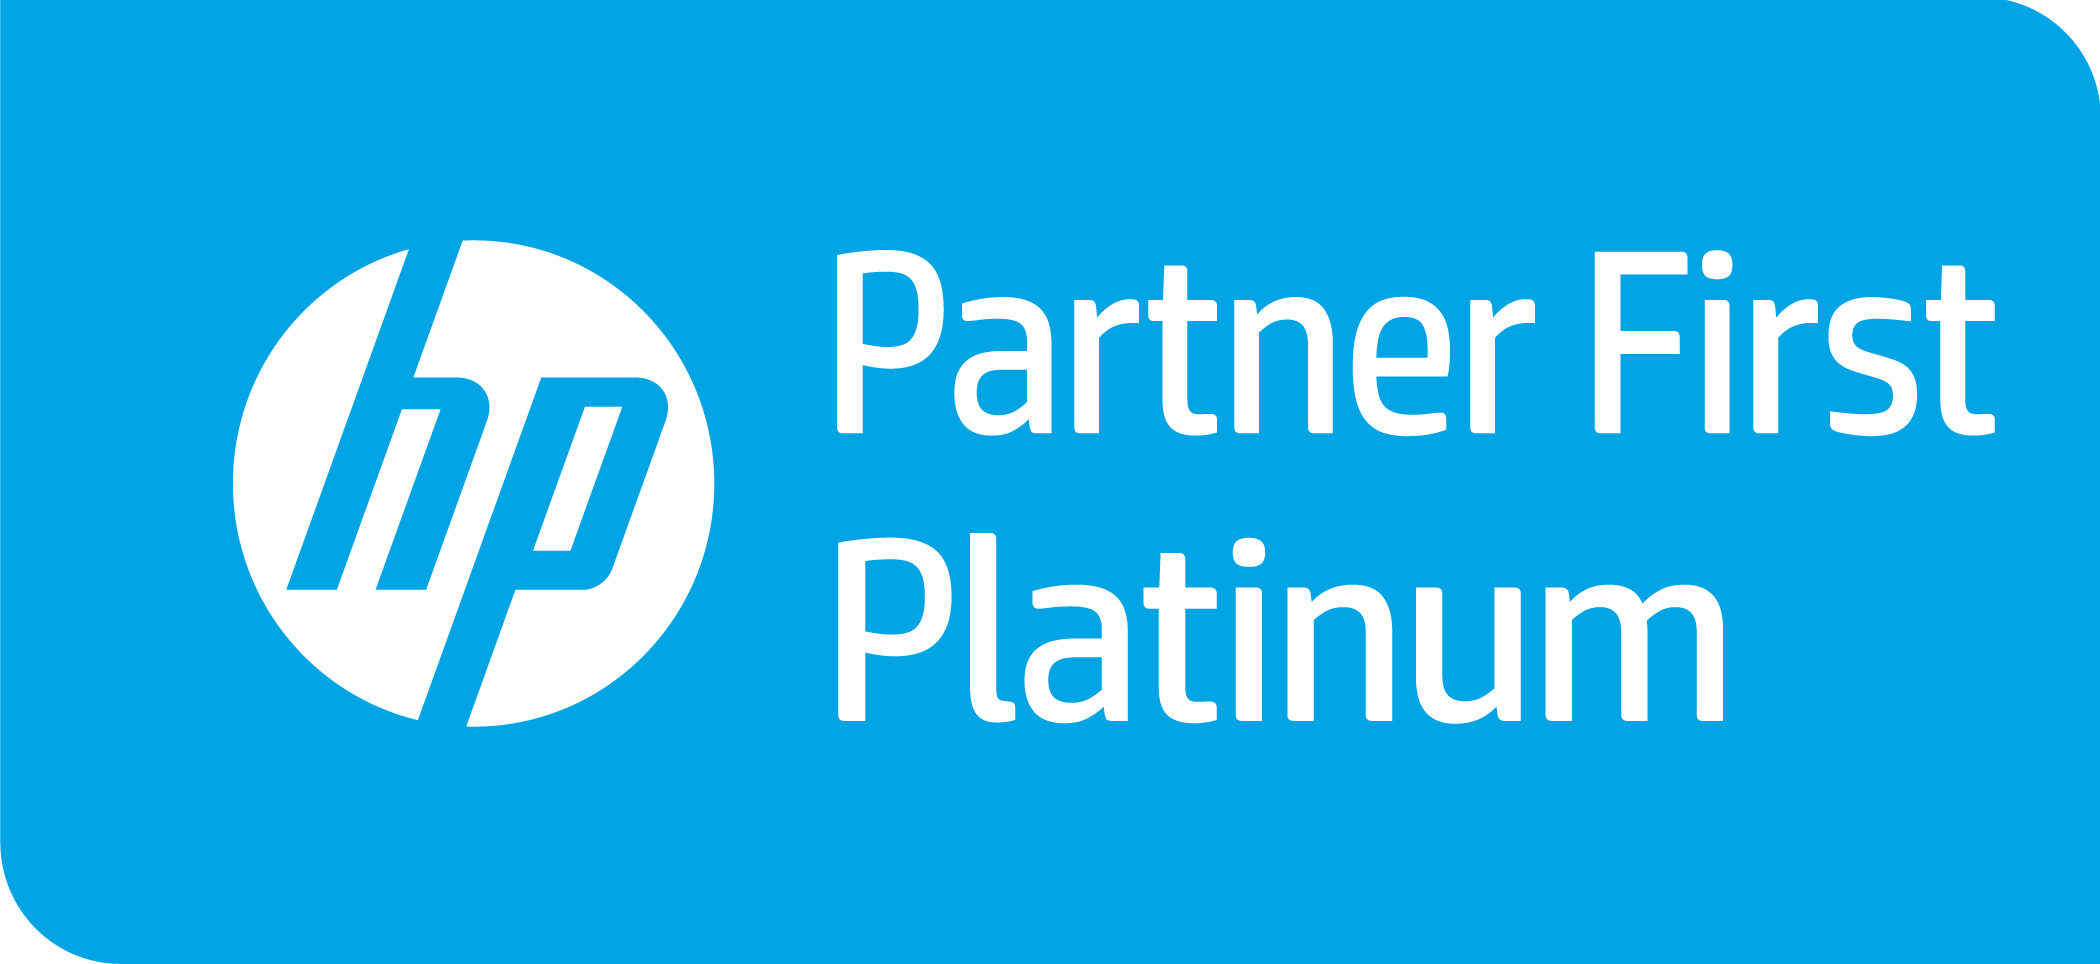 HP Partner First Platinum 